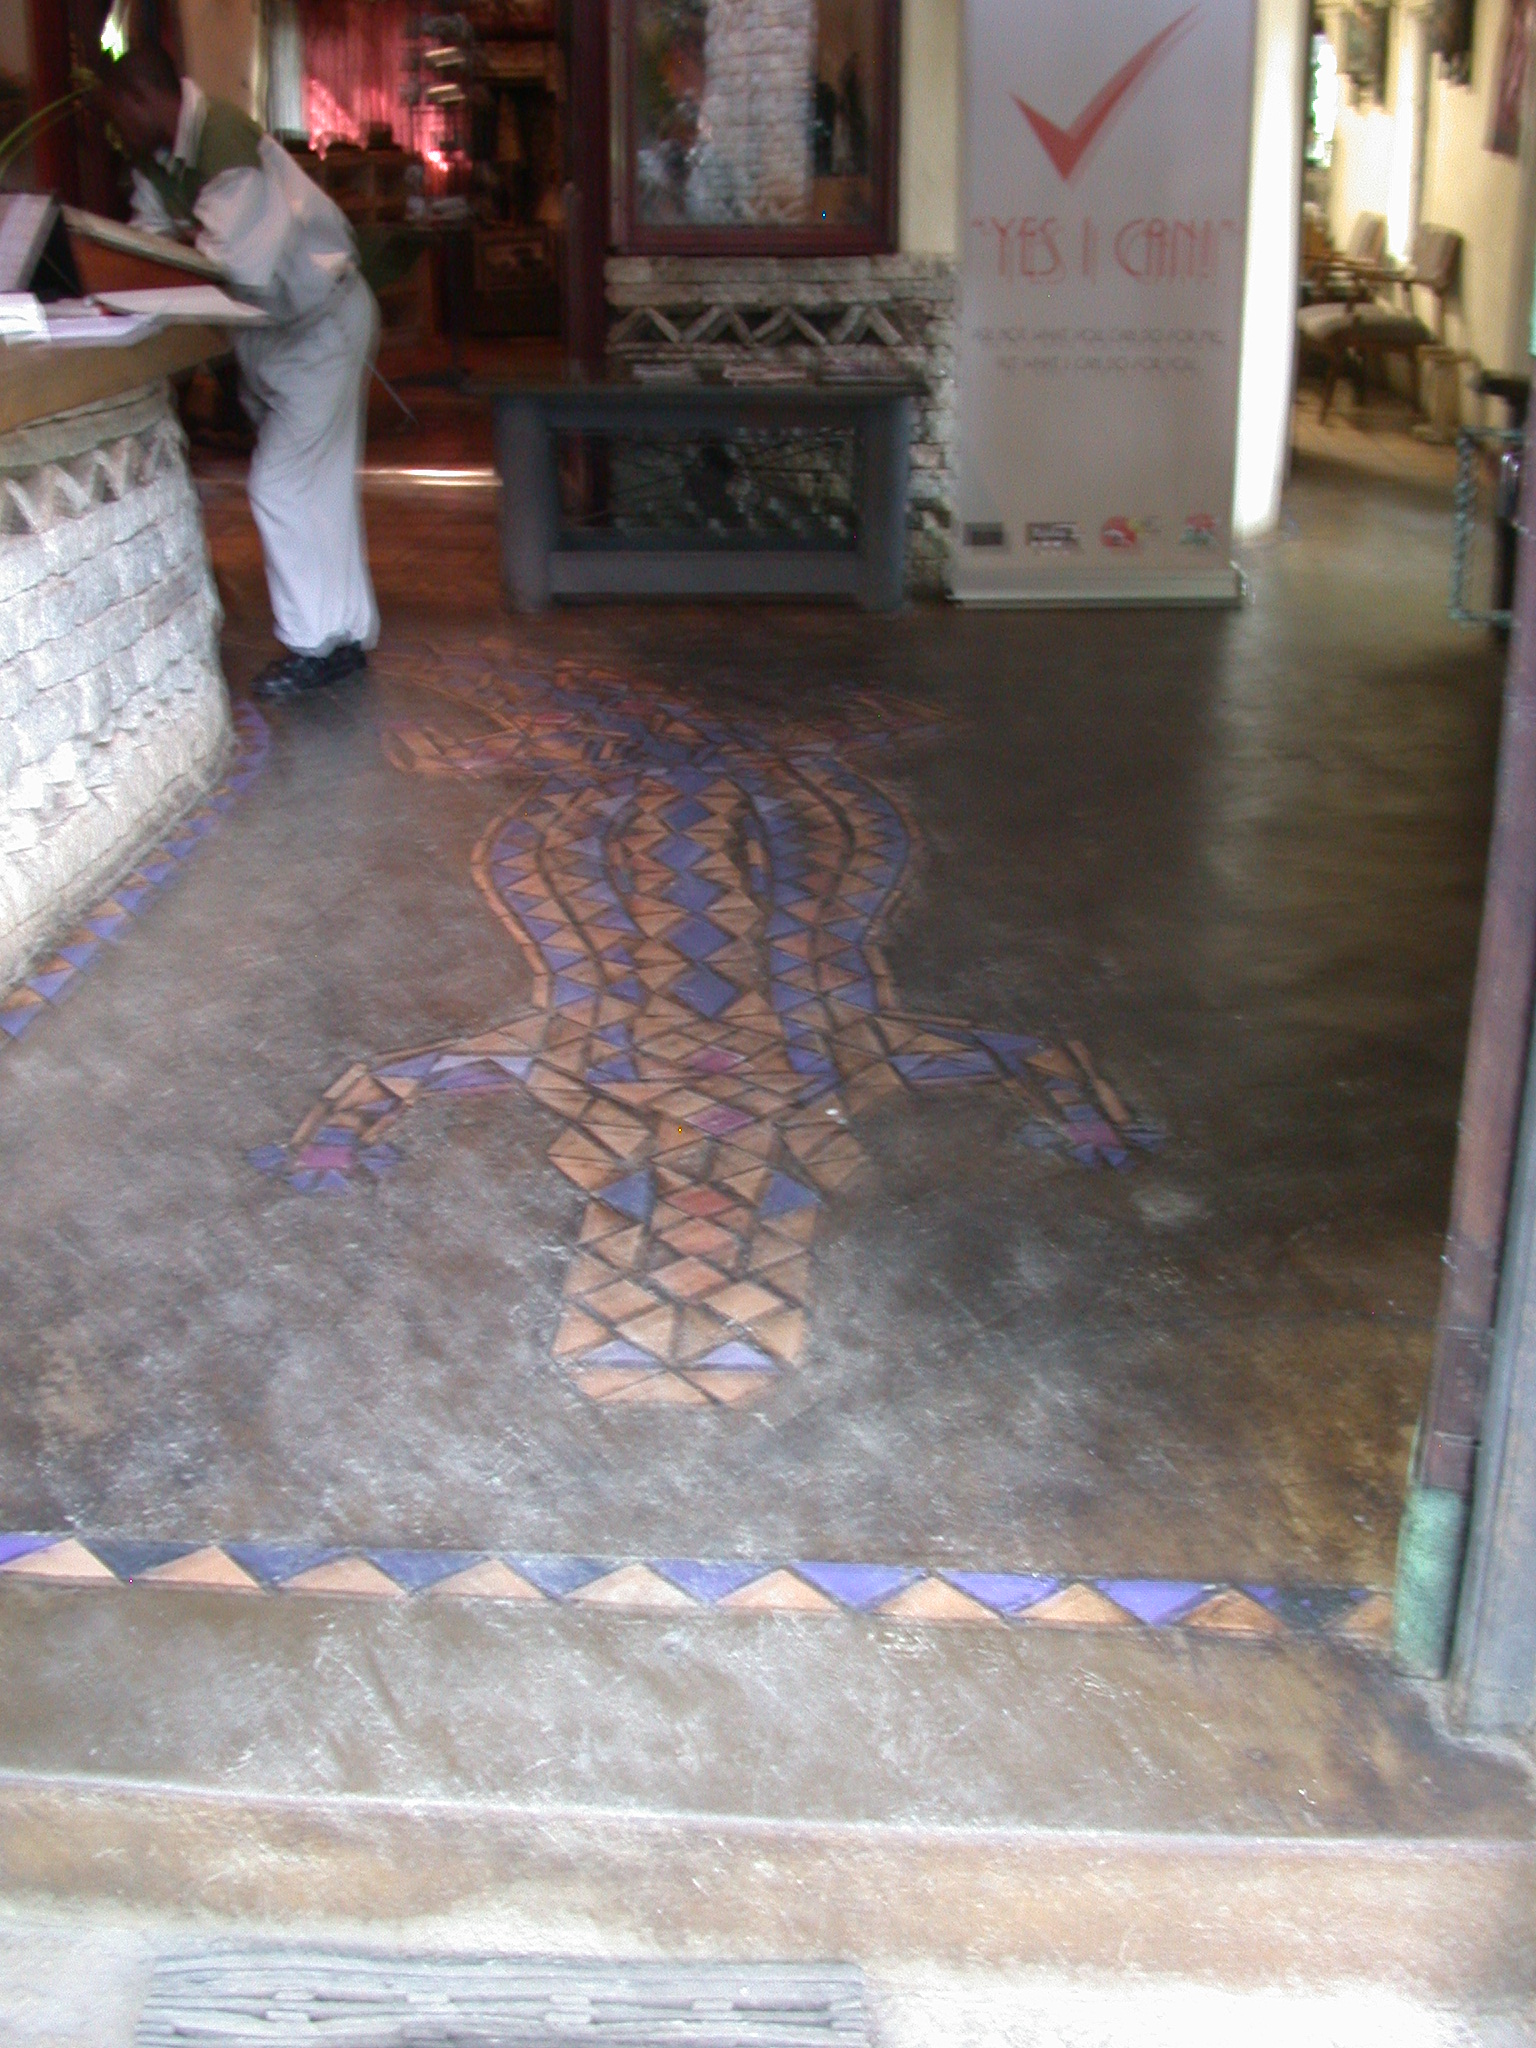 Floor Mosaic Probably of Crocodile or Lizard, Reception at the Ancient City Lodge, Great Zimbabwe, Outside Masvingo, Zimbabwe